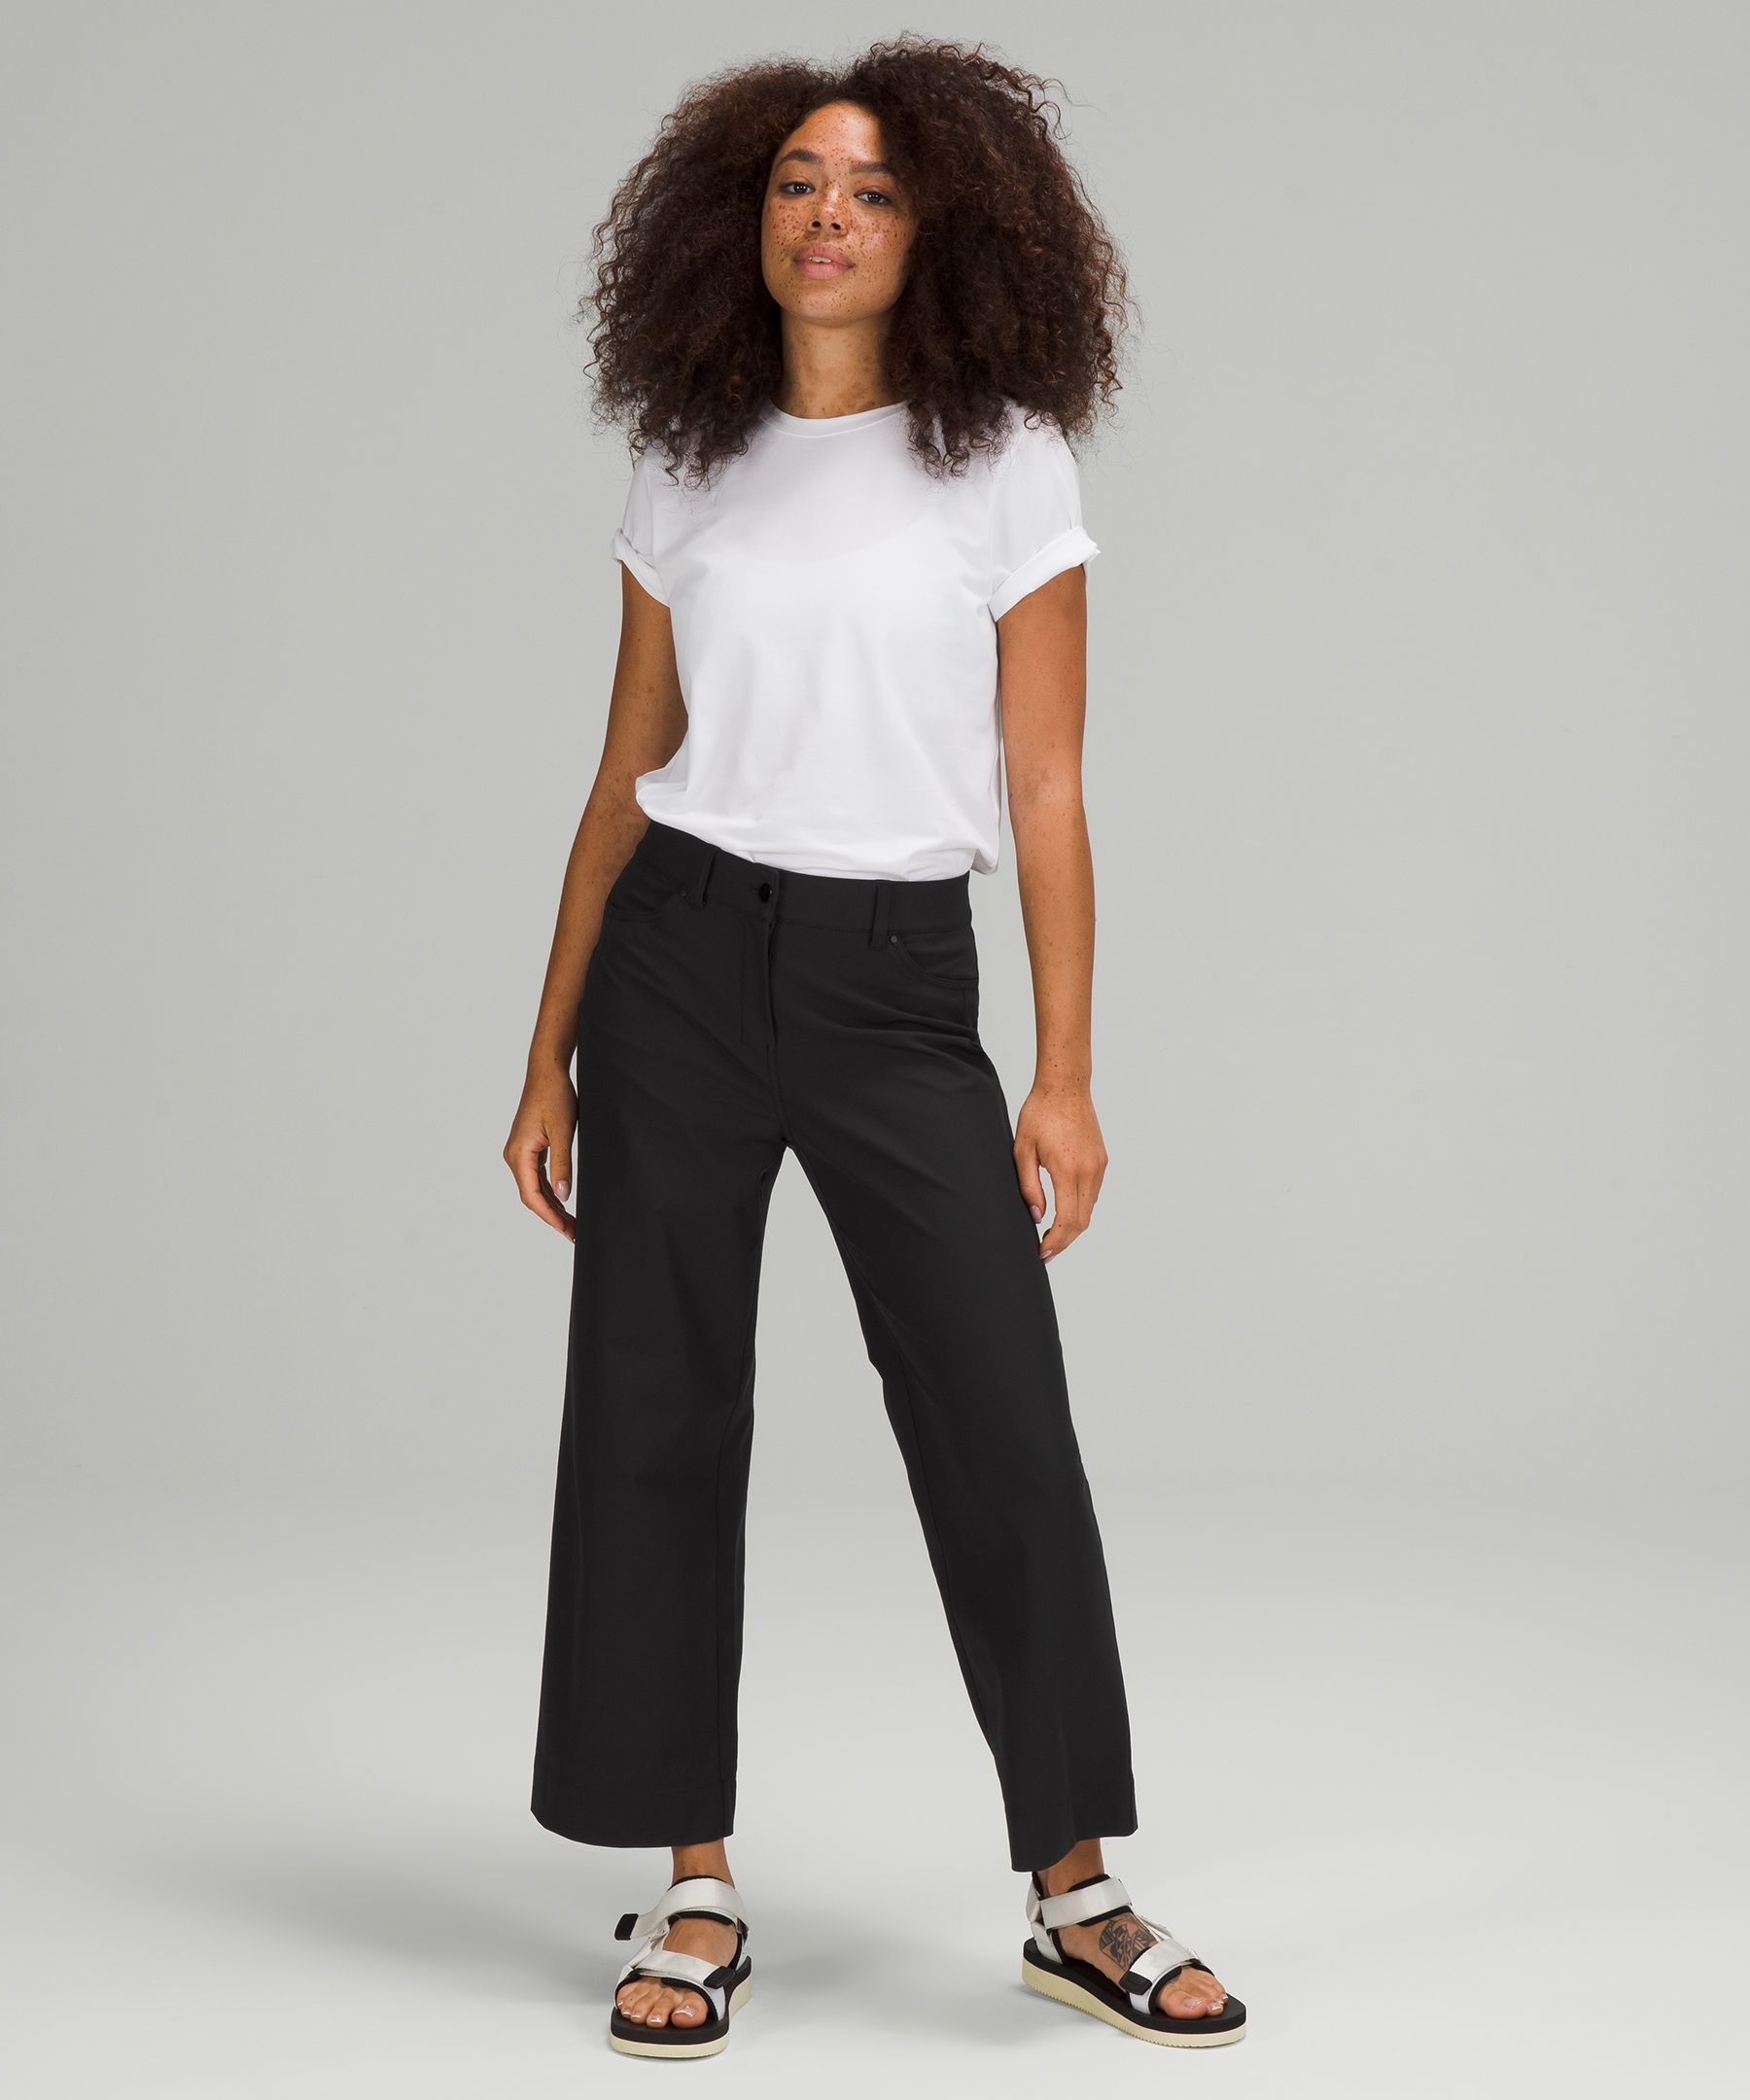 Lululemon City Sleek Pants - Brand New! - clothing & accessories - by owner  - apparel sale - craigslist